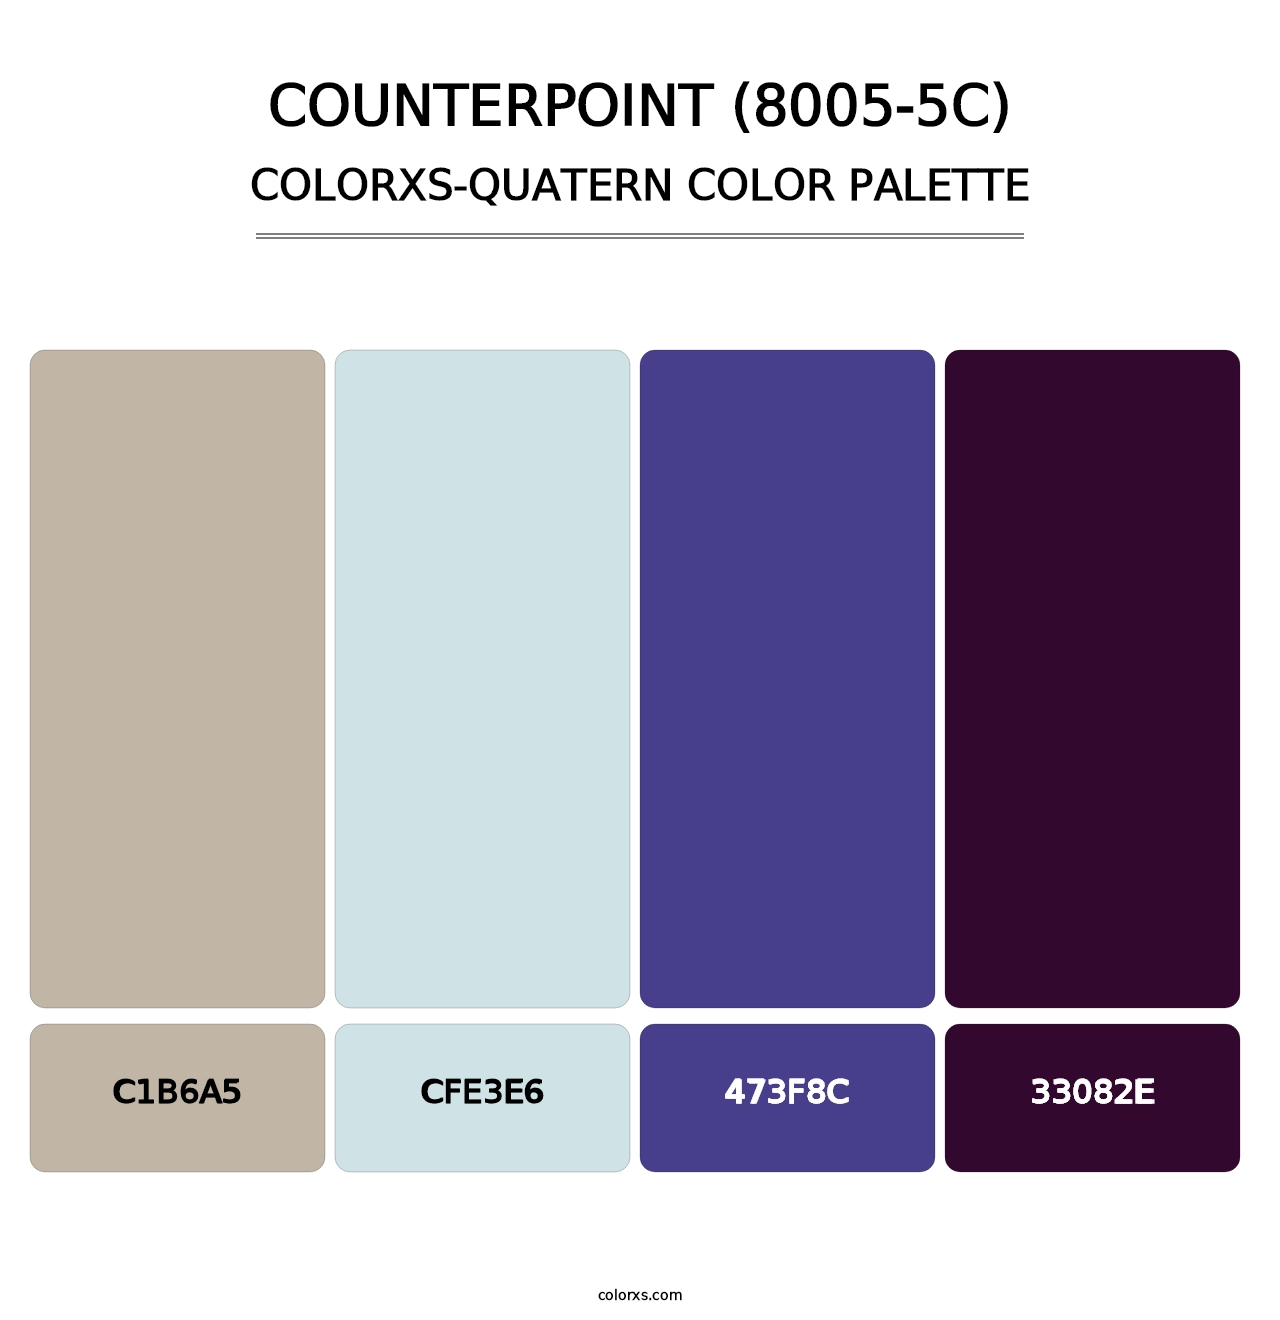 Counterpoint (8005-5C) - Colorxs Quatern Palette